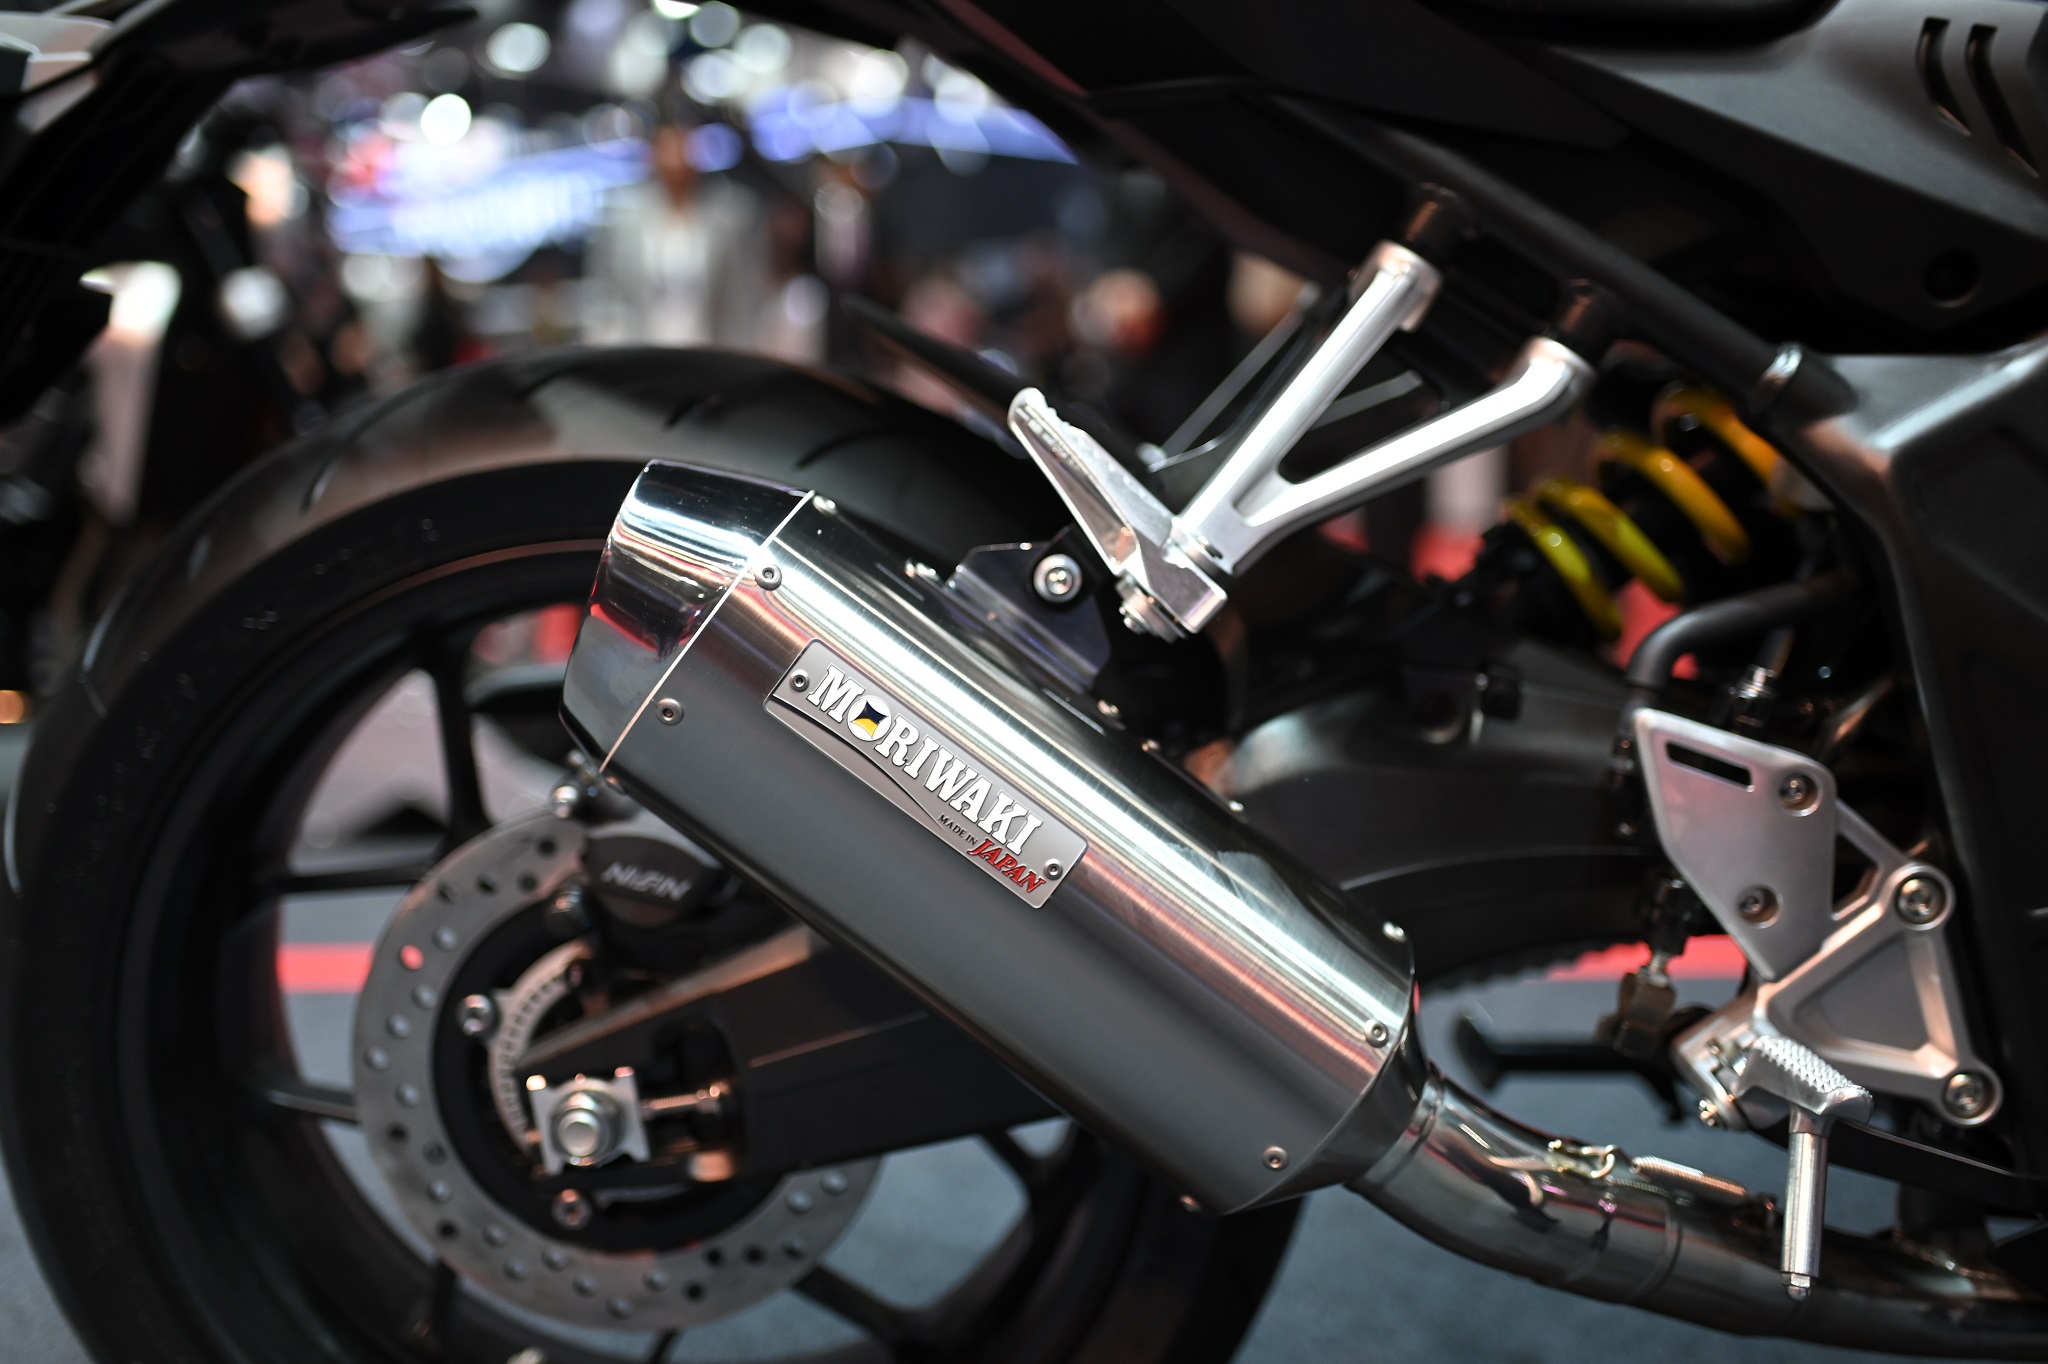 IAM_3871 ไบค์เกอร์รุ่นใหญ่ใจถึง พร้อมรับโปรเด็ดโซน Bigbike บูท Honda ในงาน Motor Show 2019 - IAM 3871